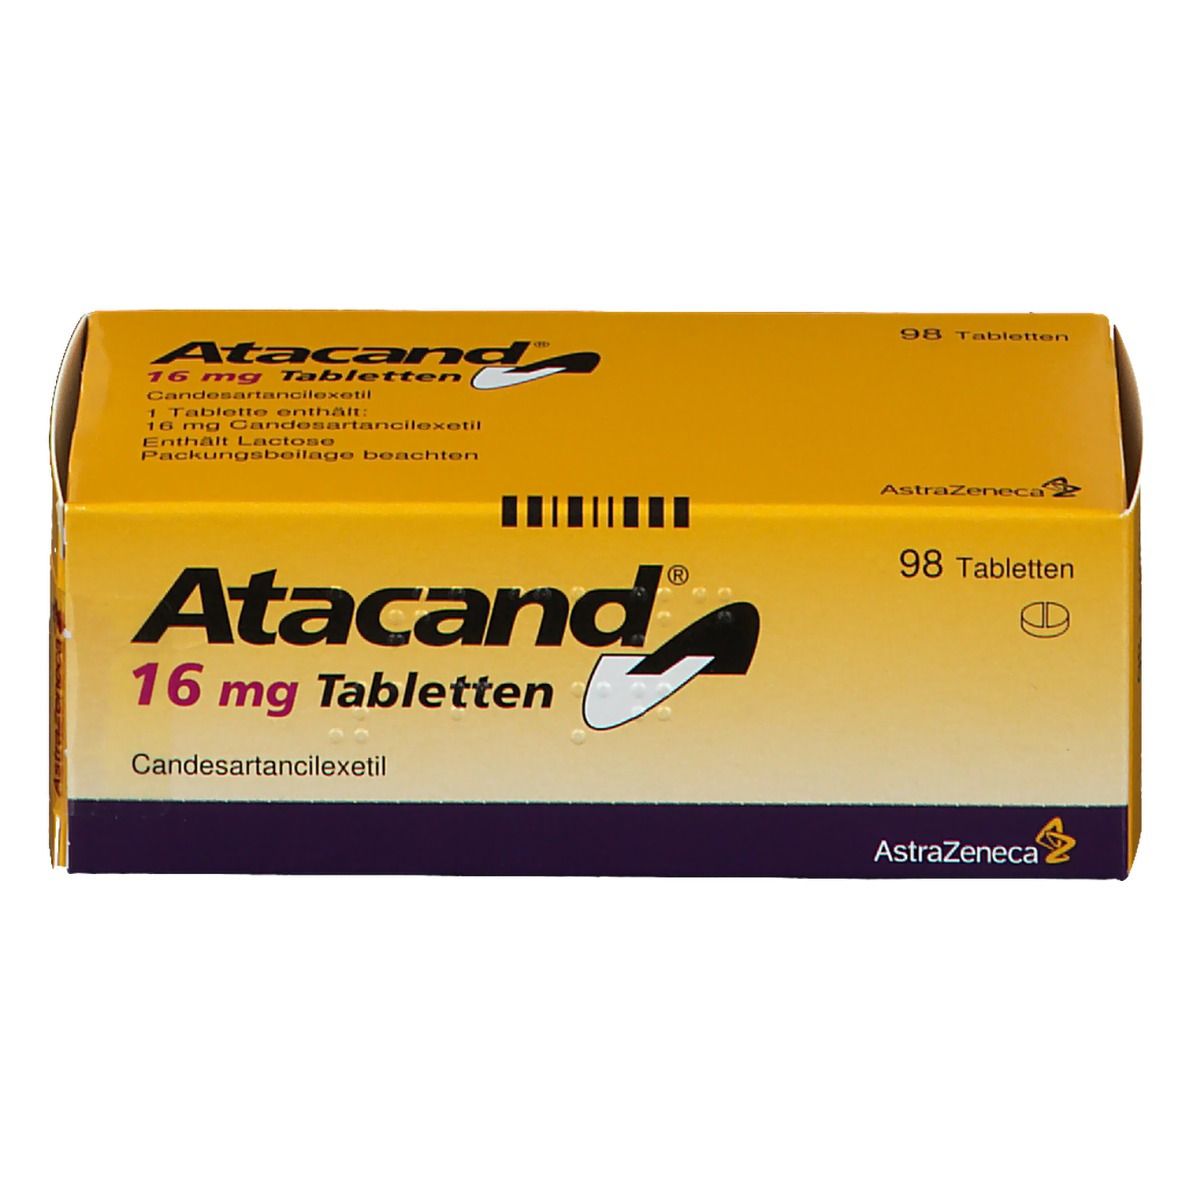 Atacand® 16 mg